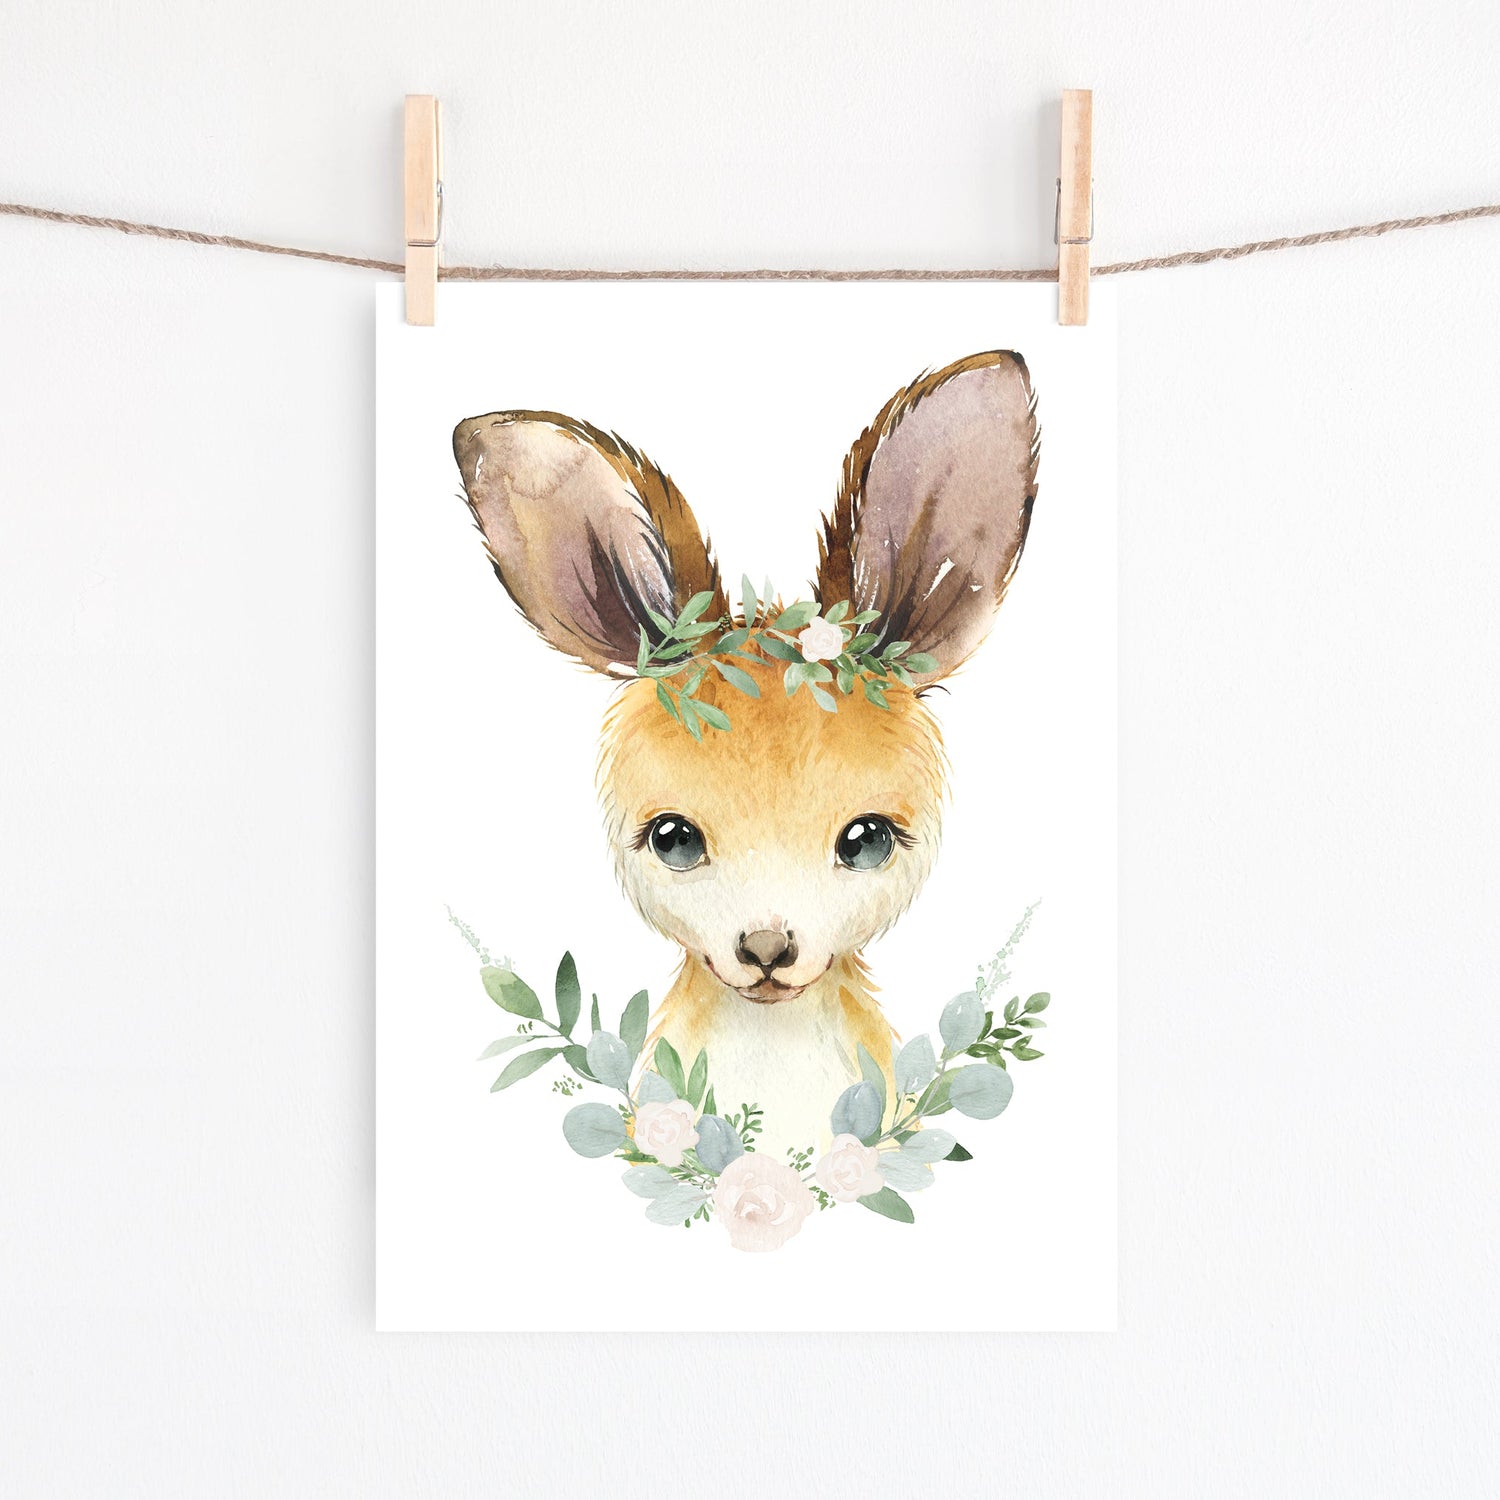 Floral Wombat, Koala & Kangaroo Prints